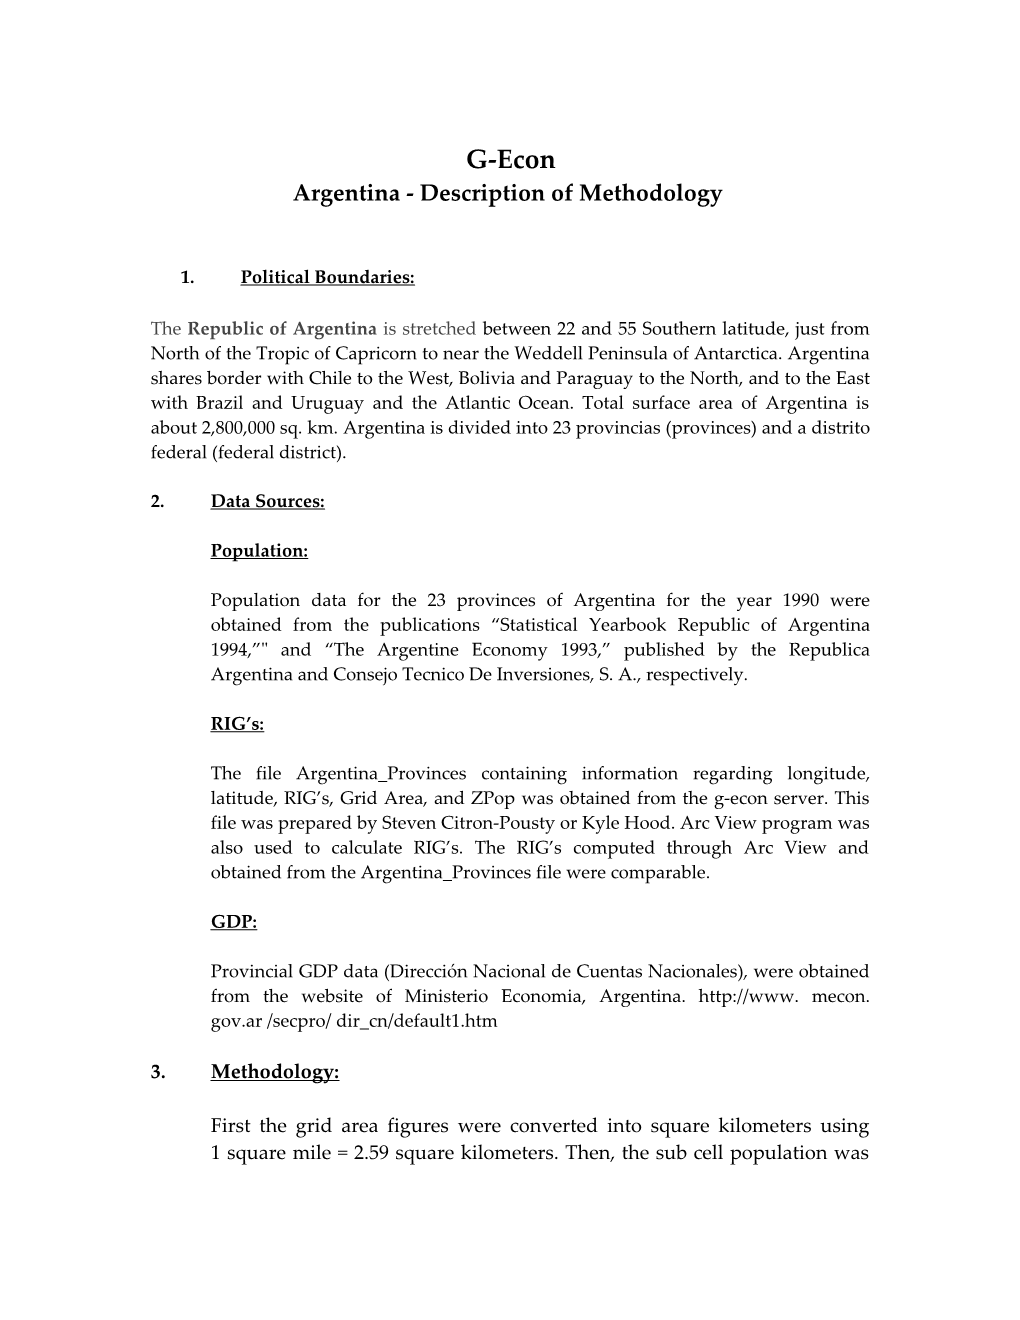 Argentina- Description of Methodology